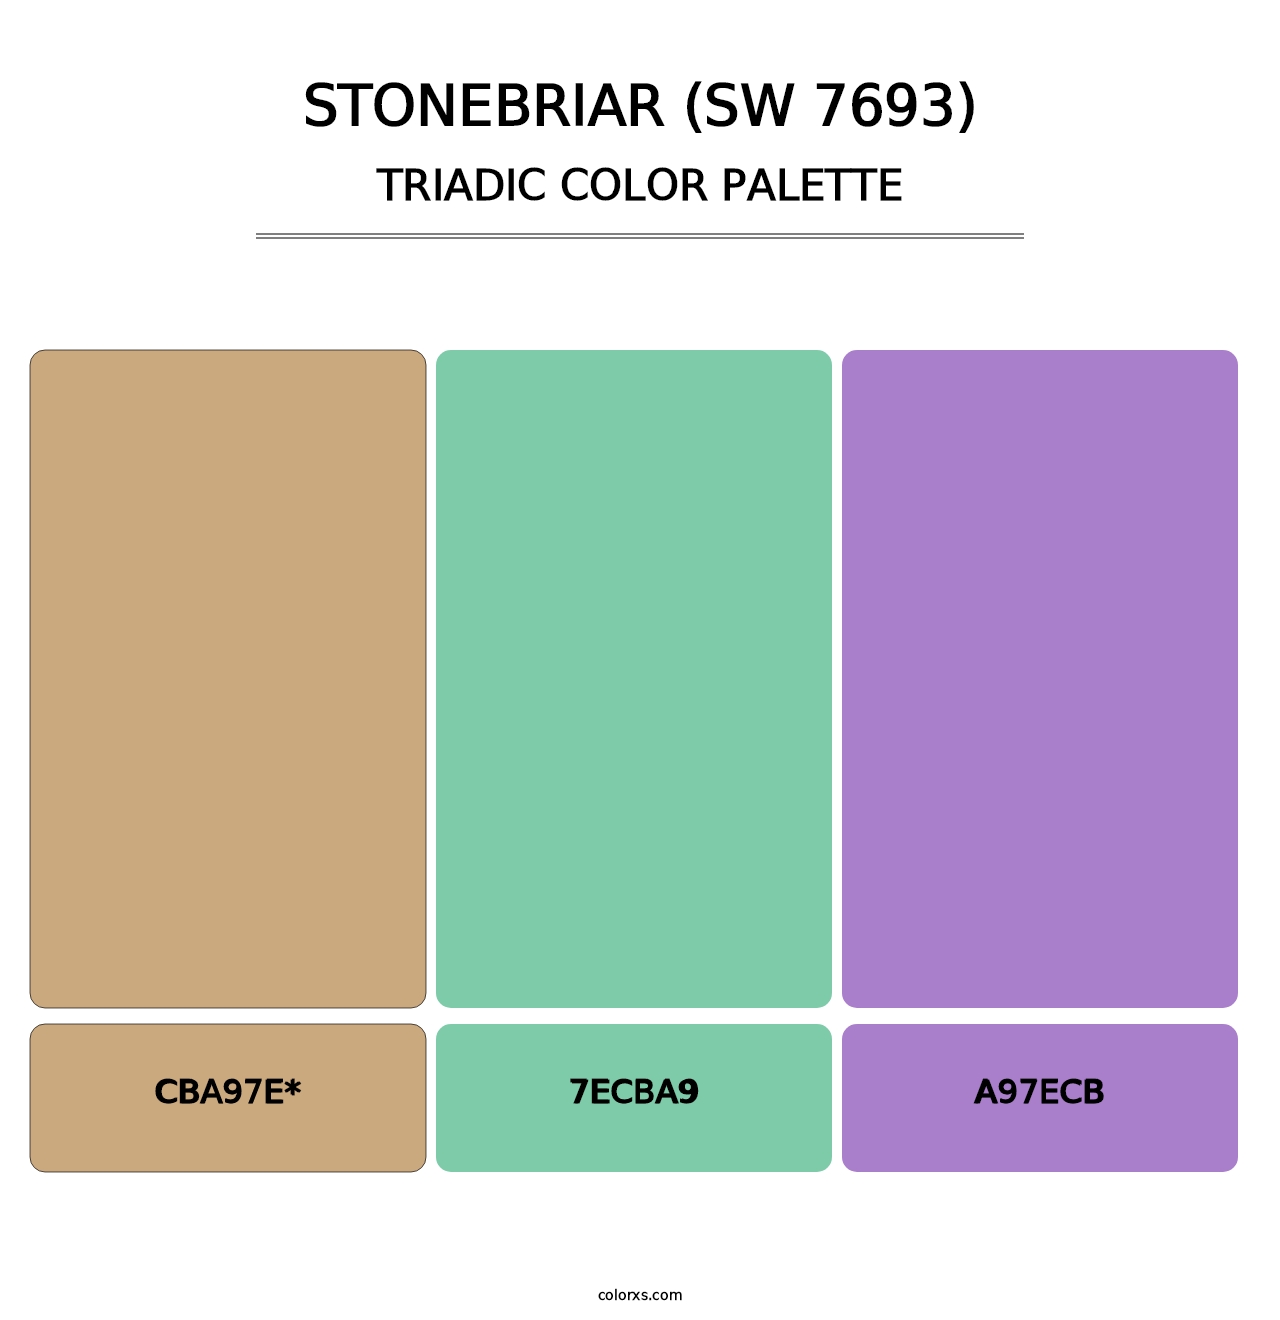 Stonebriar (SW 7693) - Triadic Color Palette